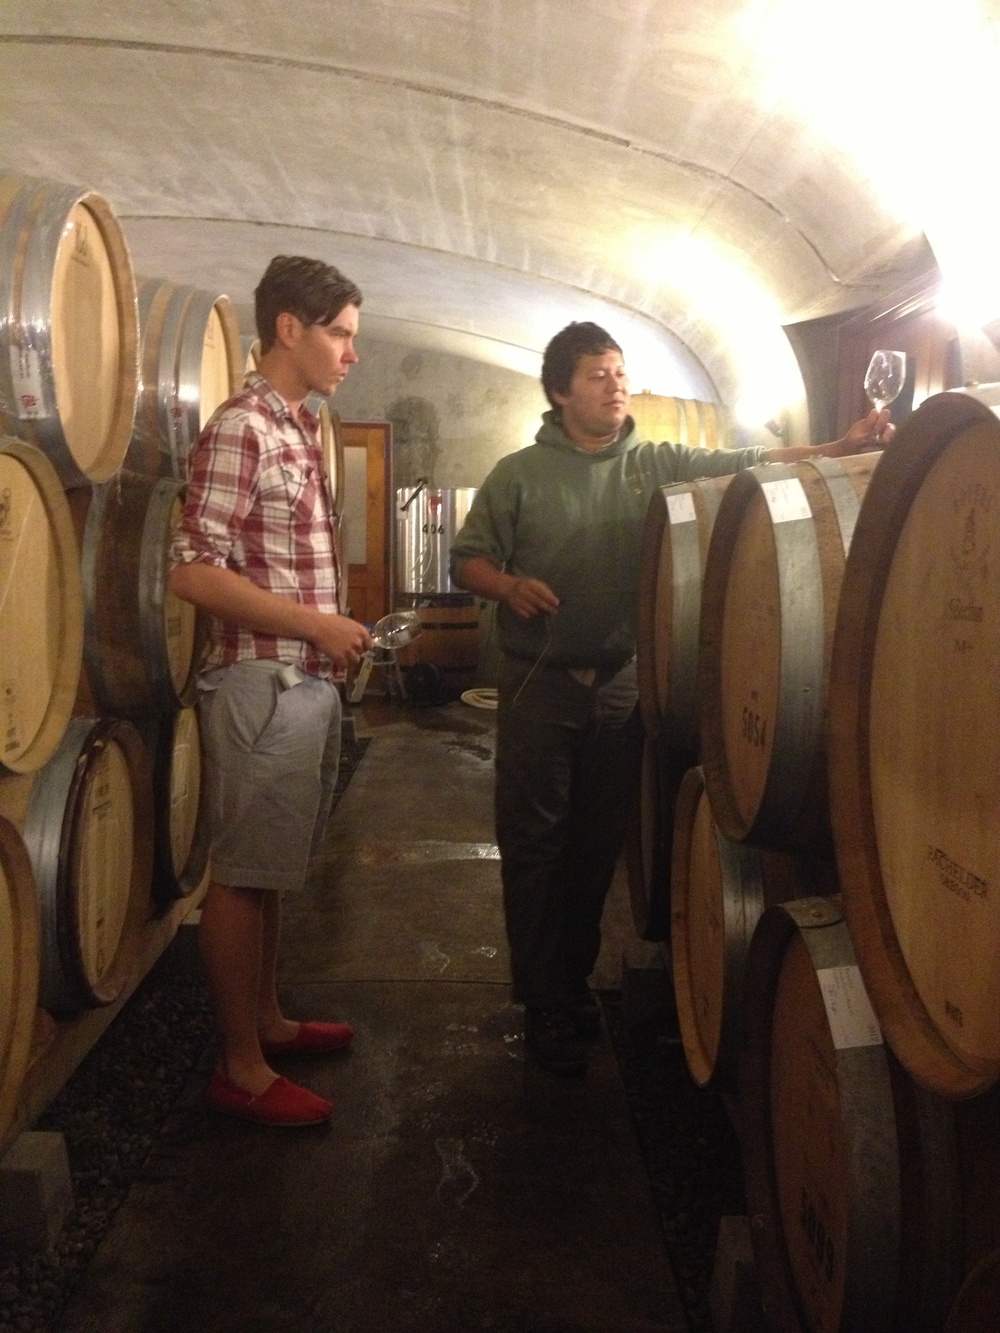  Tasting Thomas Bachelder's Oregon Chardonnays in barrel at Lemelson with cellarmaster David Martinez.  